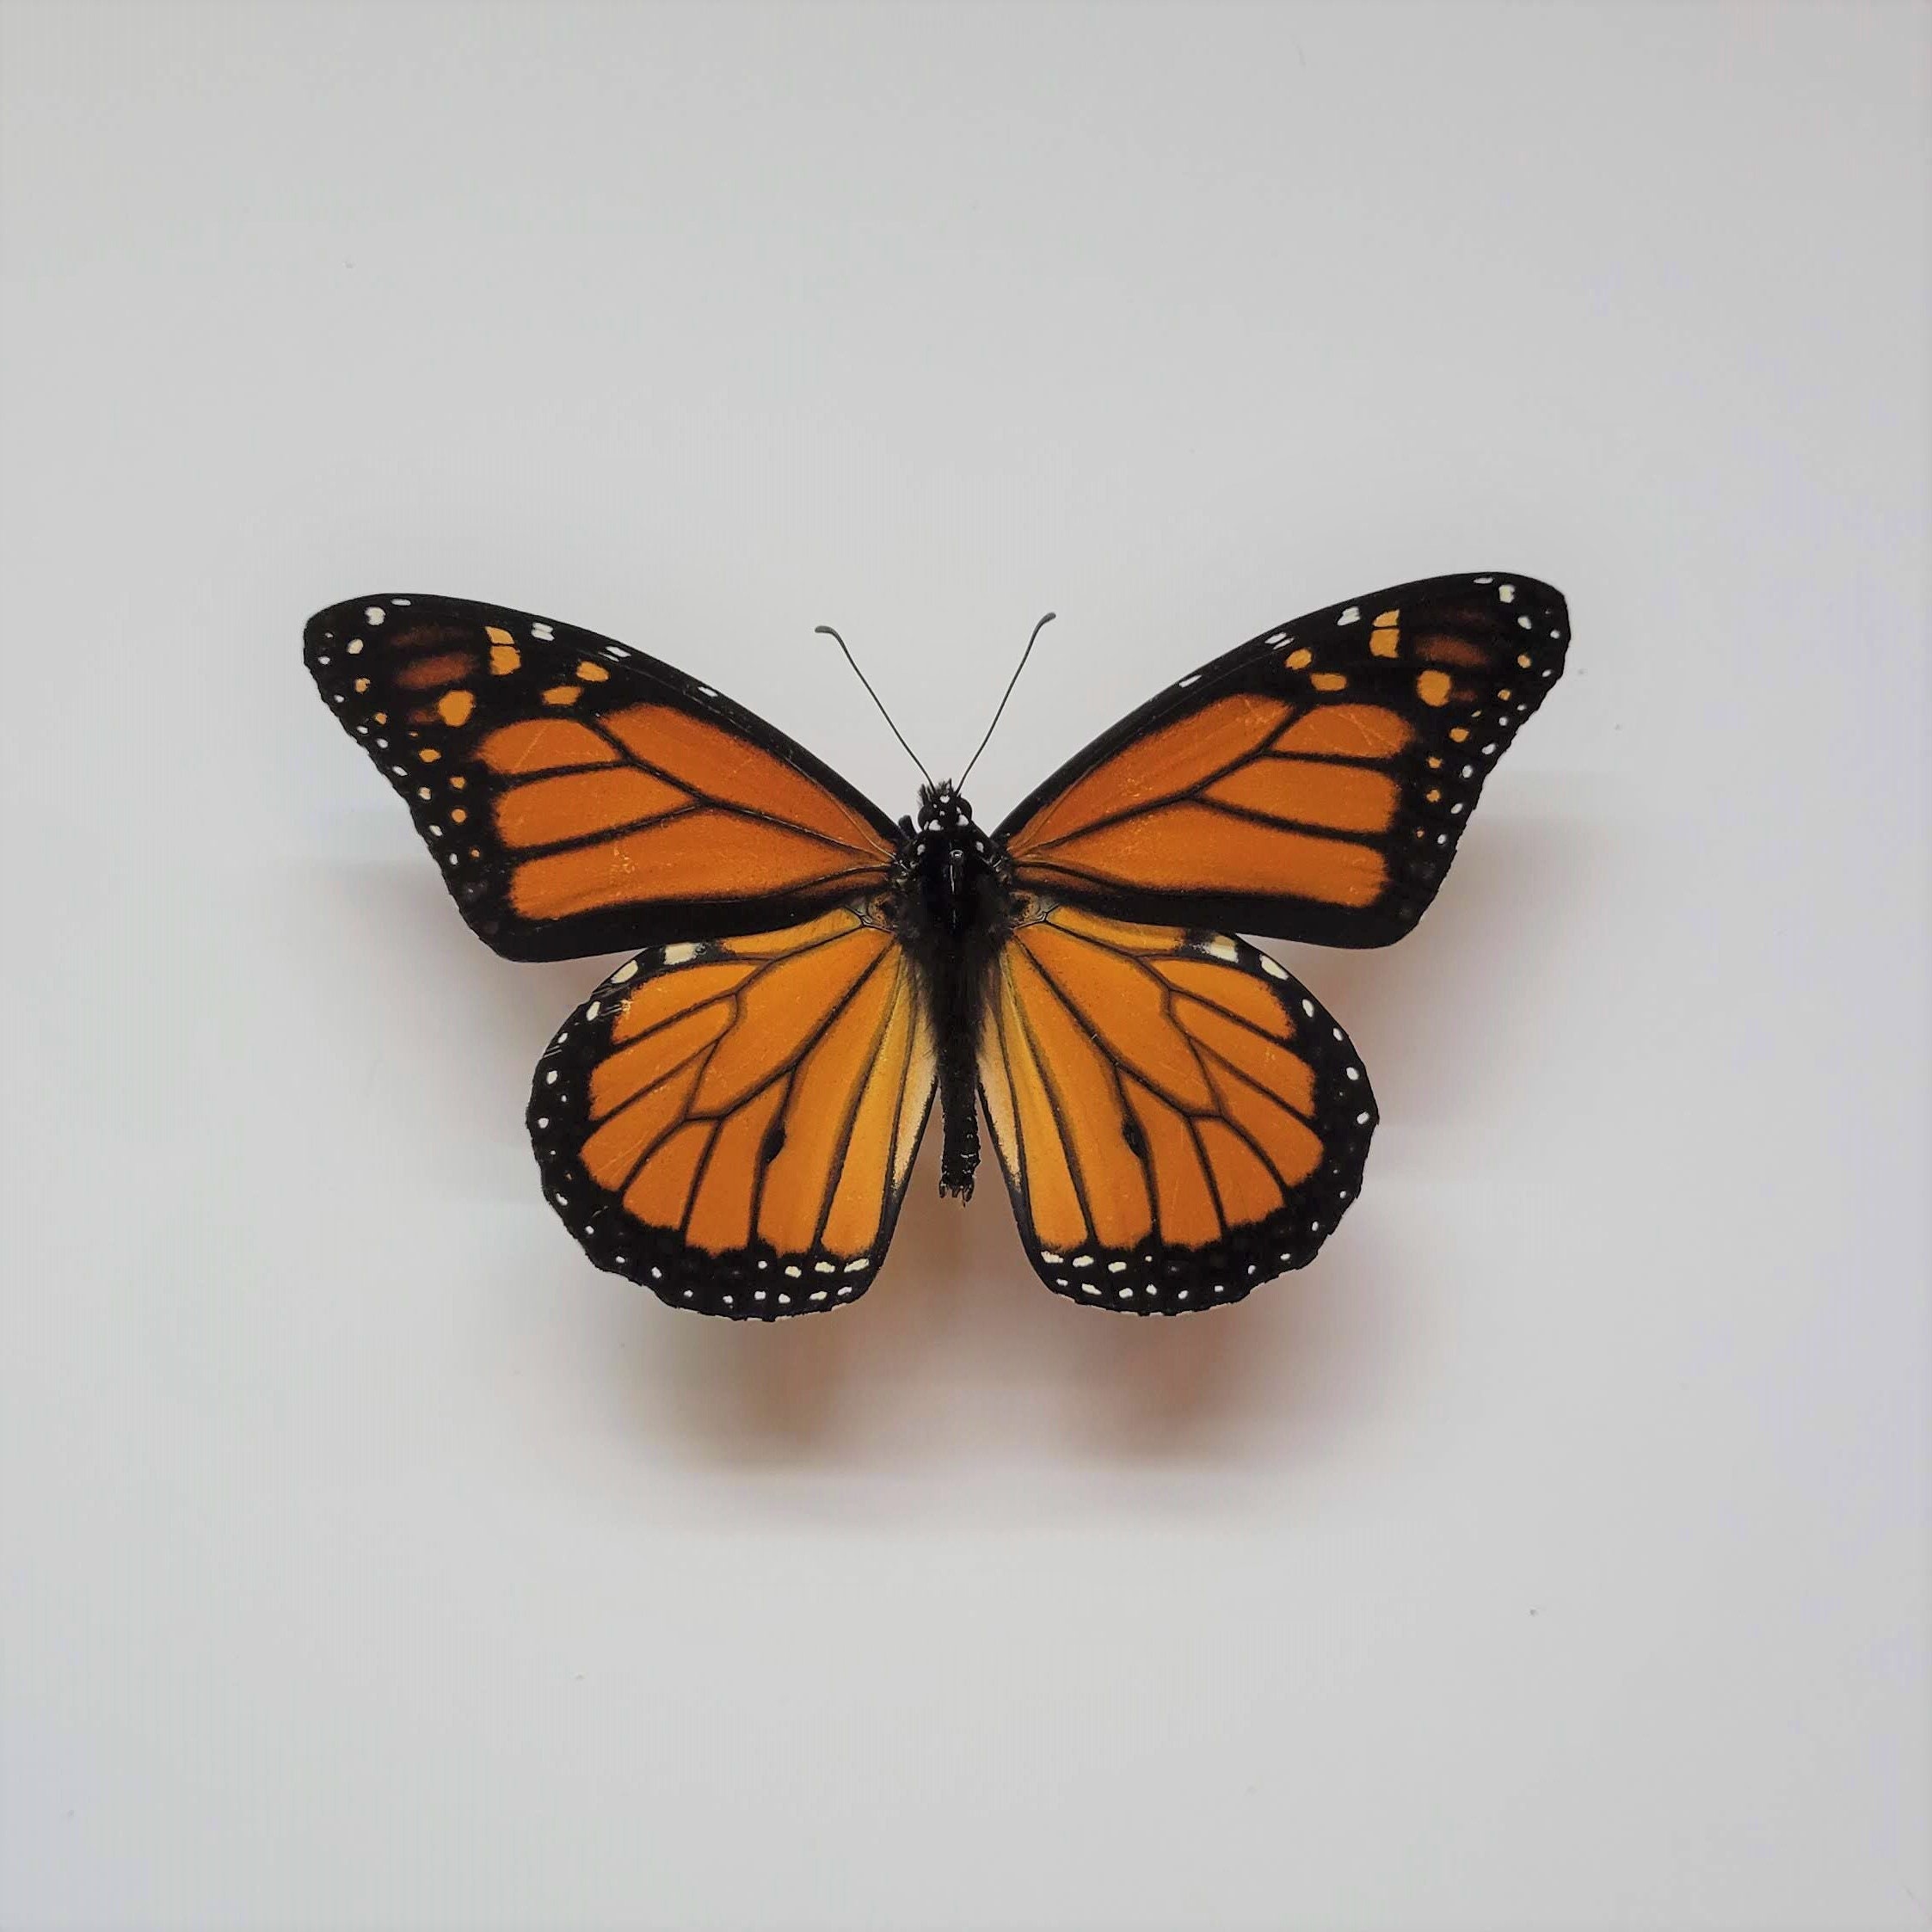 Real Monarch Butterfly Specimen / American Monarch Specimen Danaus plexippus